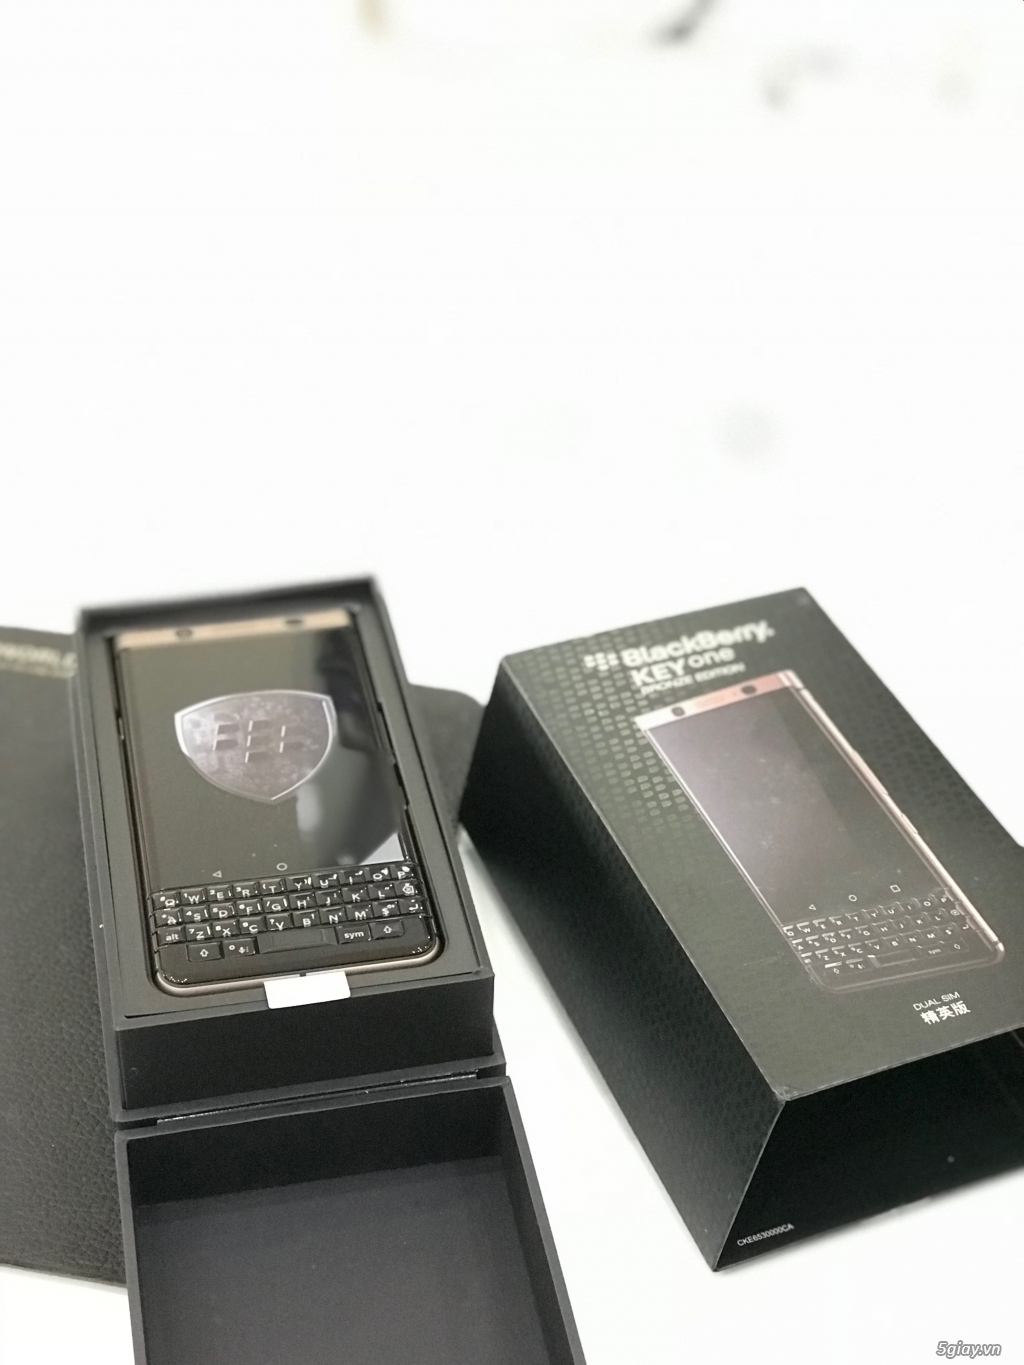 Blackberry keyone bronze 2 sim, còn bh 12thang - 3